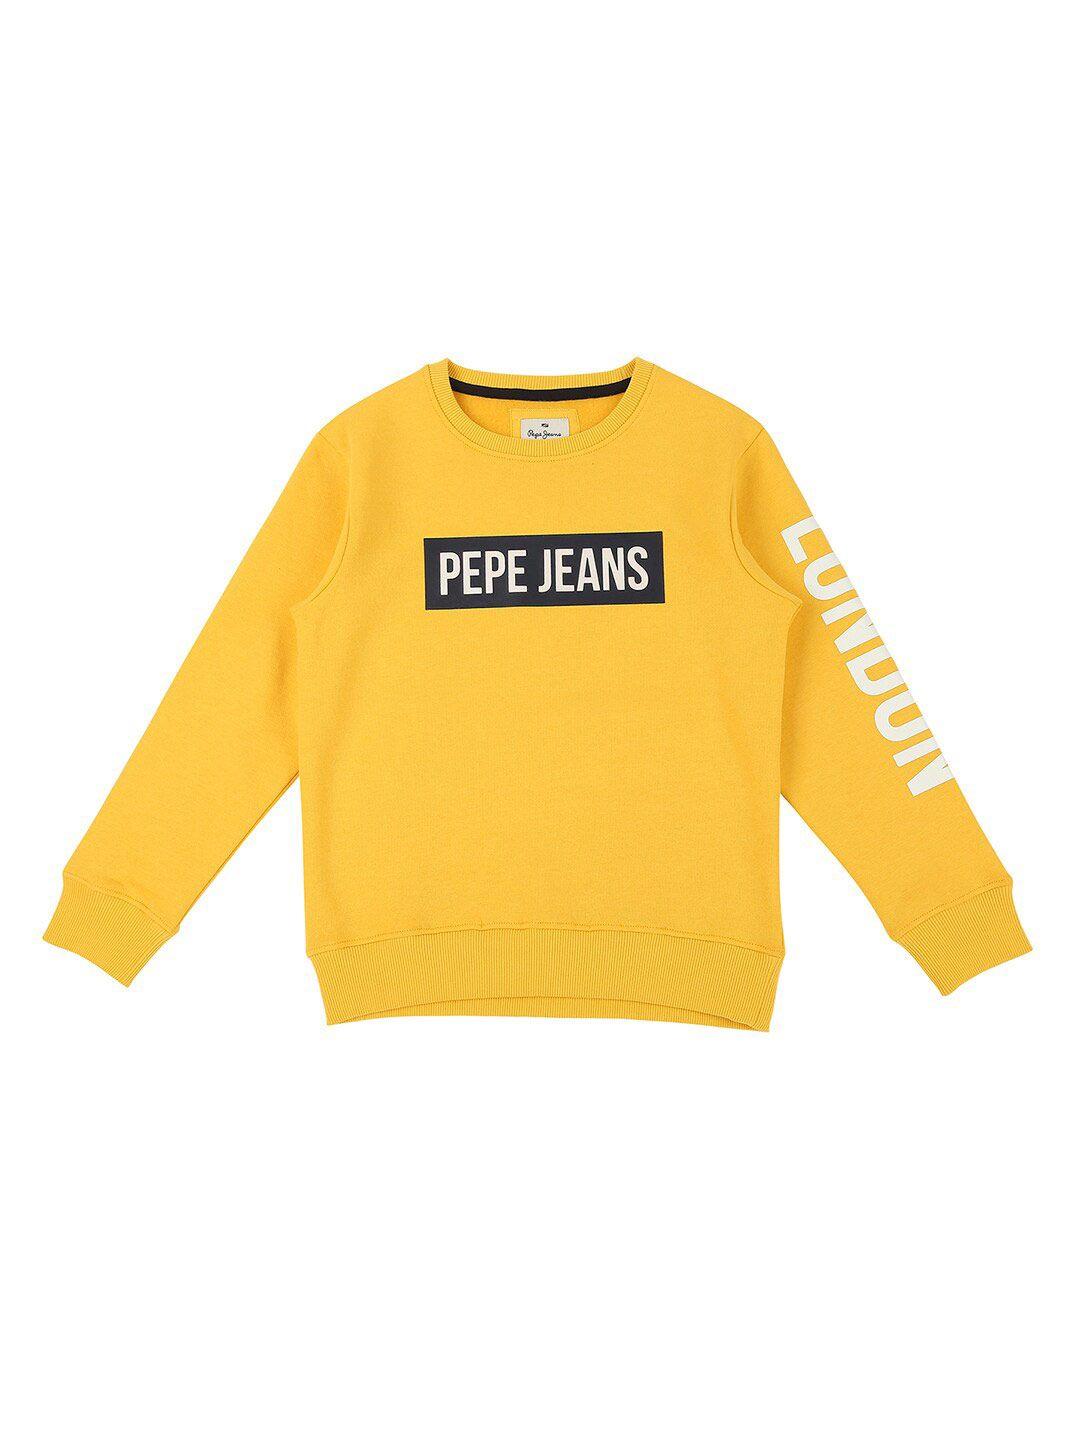 pepe jeans boys yellow printed sweatshirt